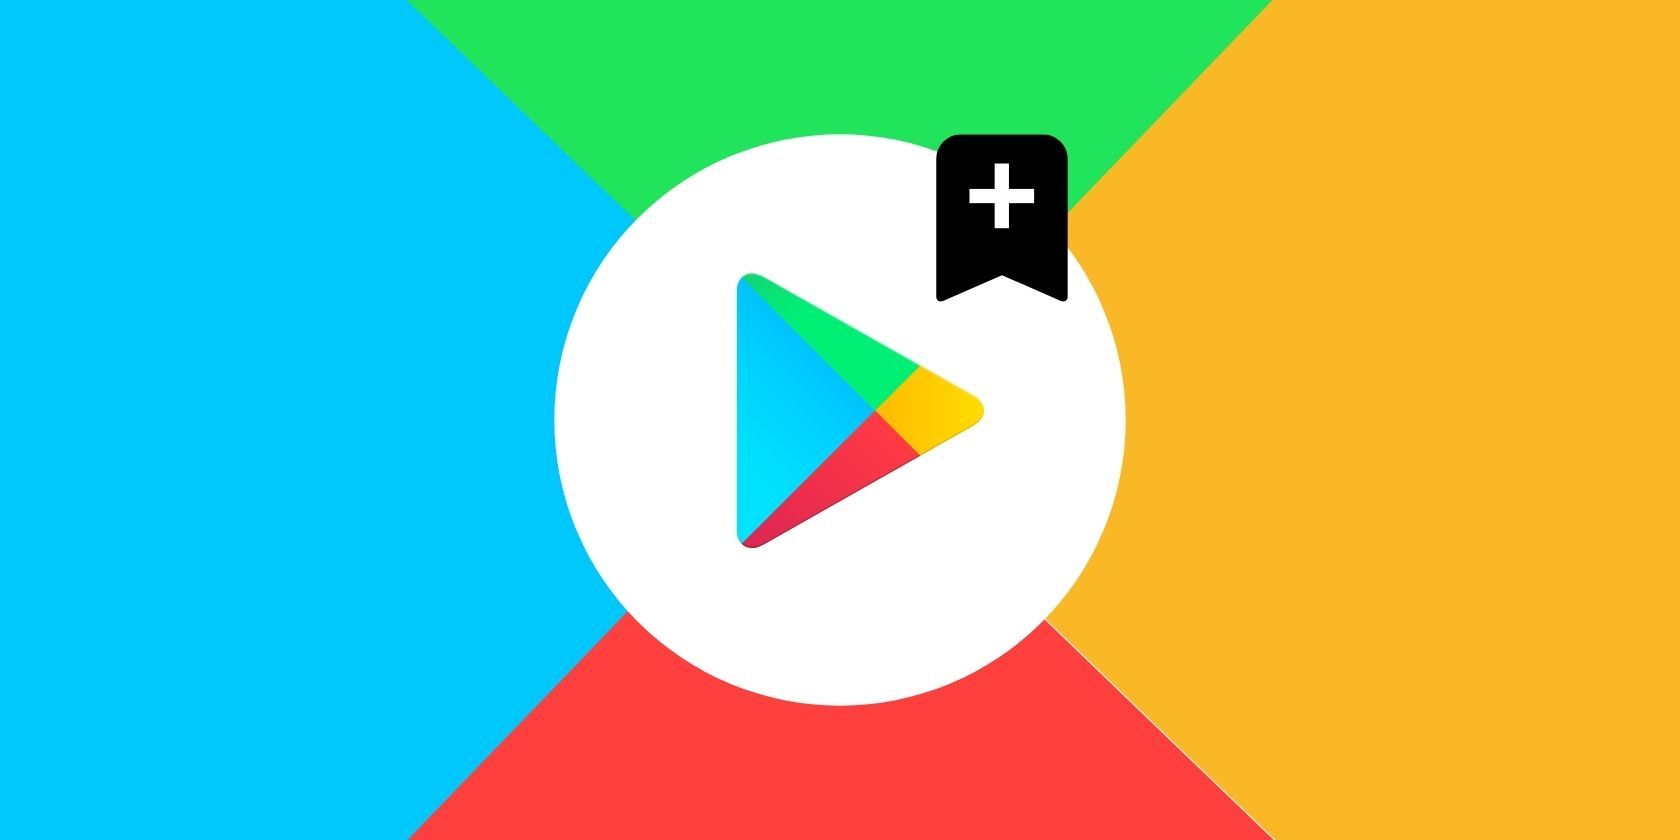 google play app download